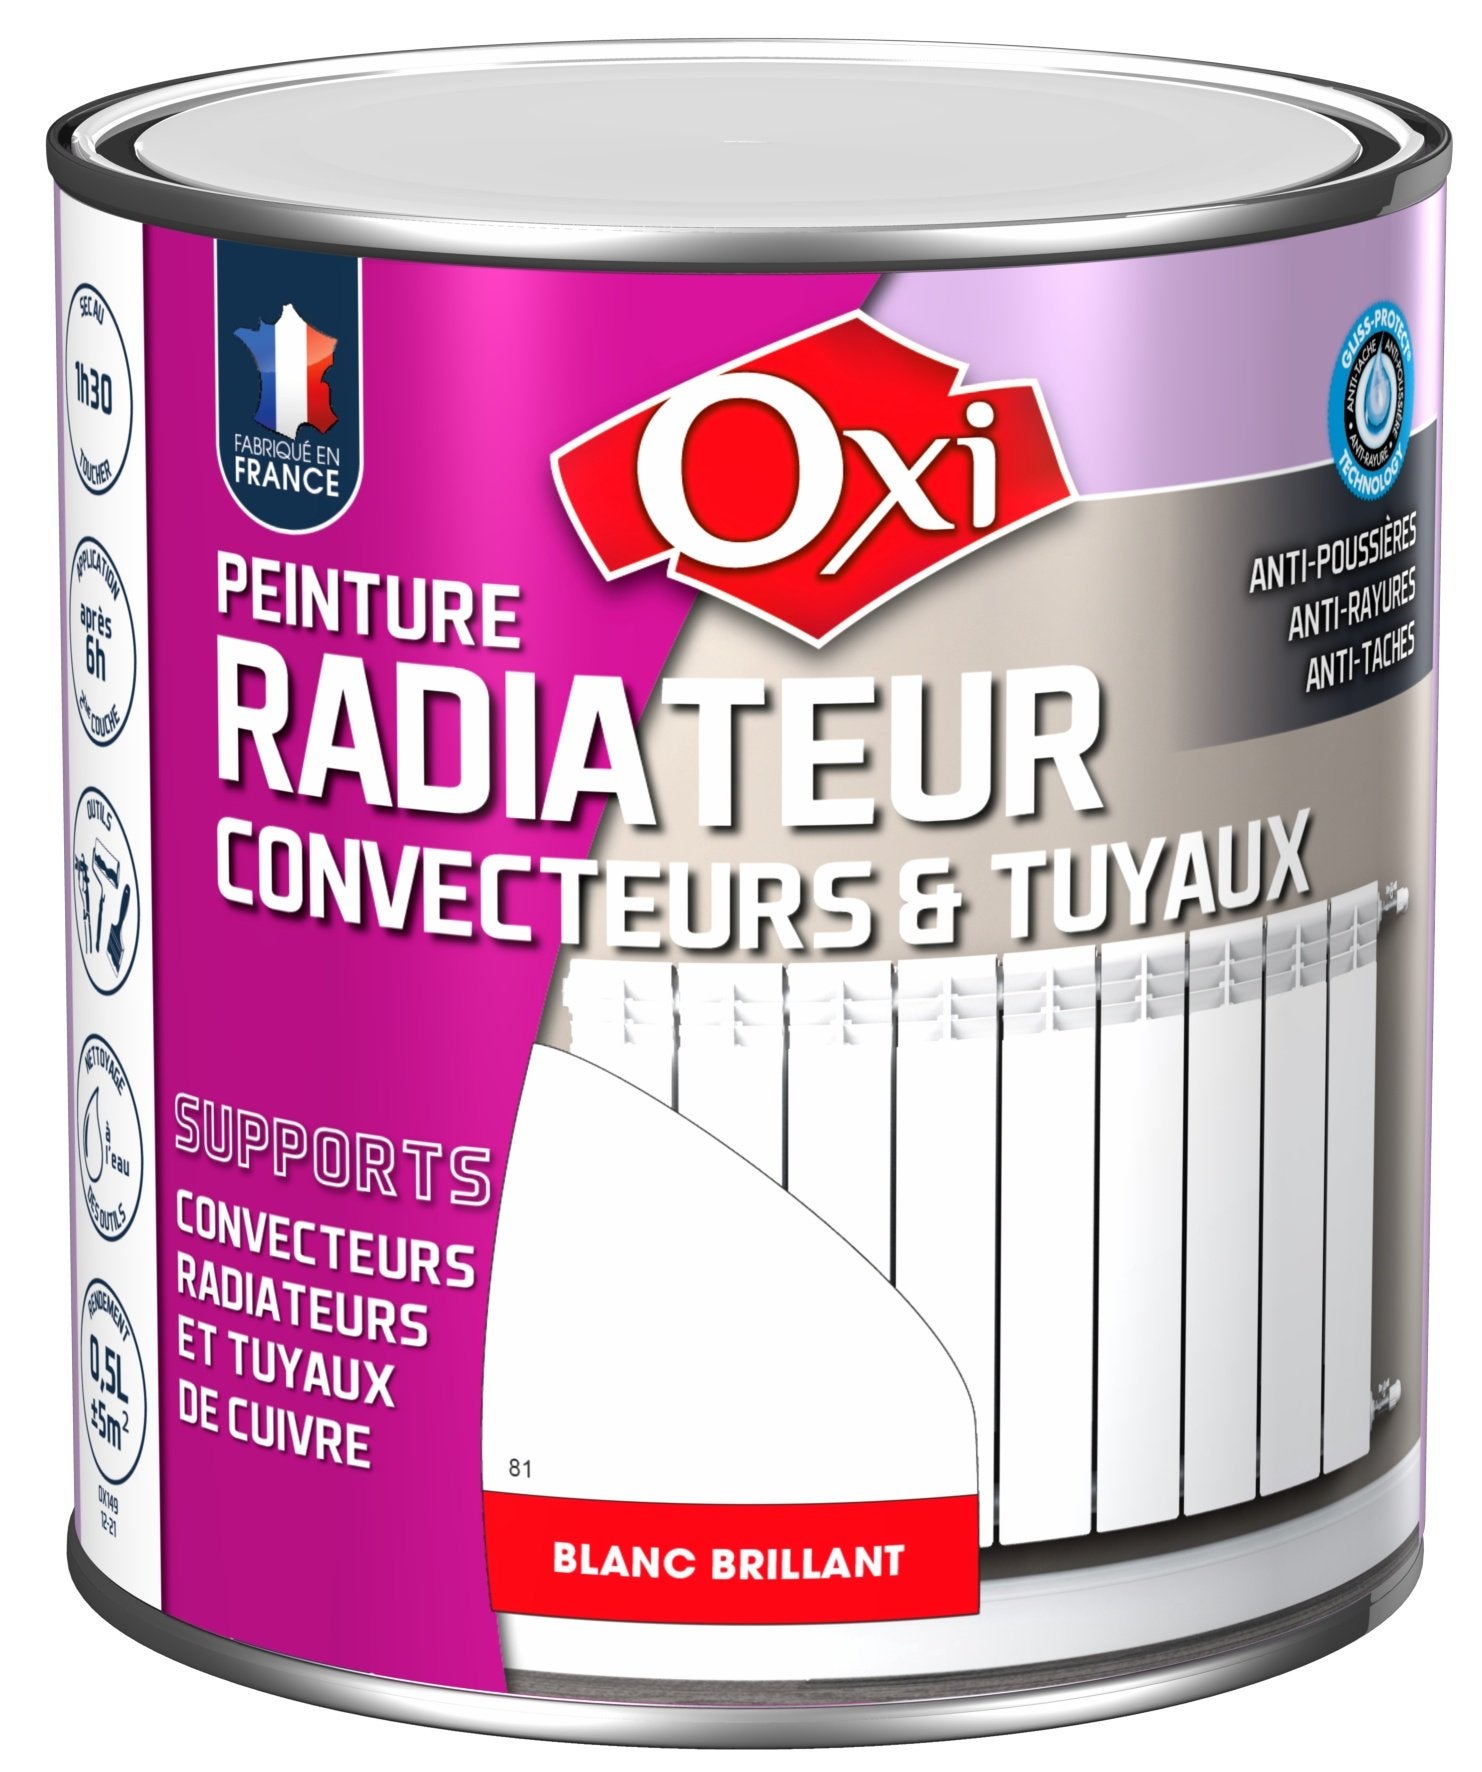 OXI PEINTURE RADIATEUR FONTE & ACIER - Peinture antirouille pour